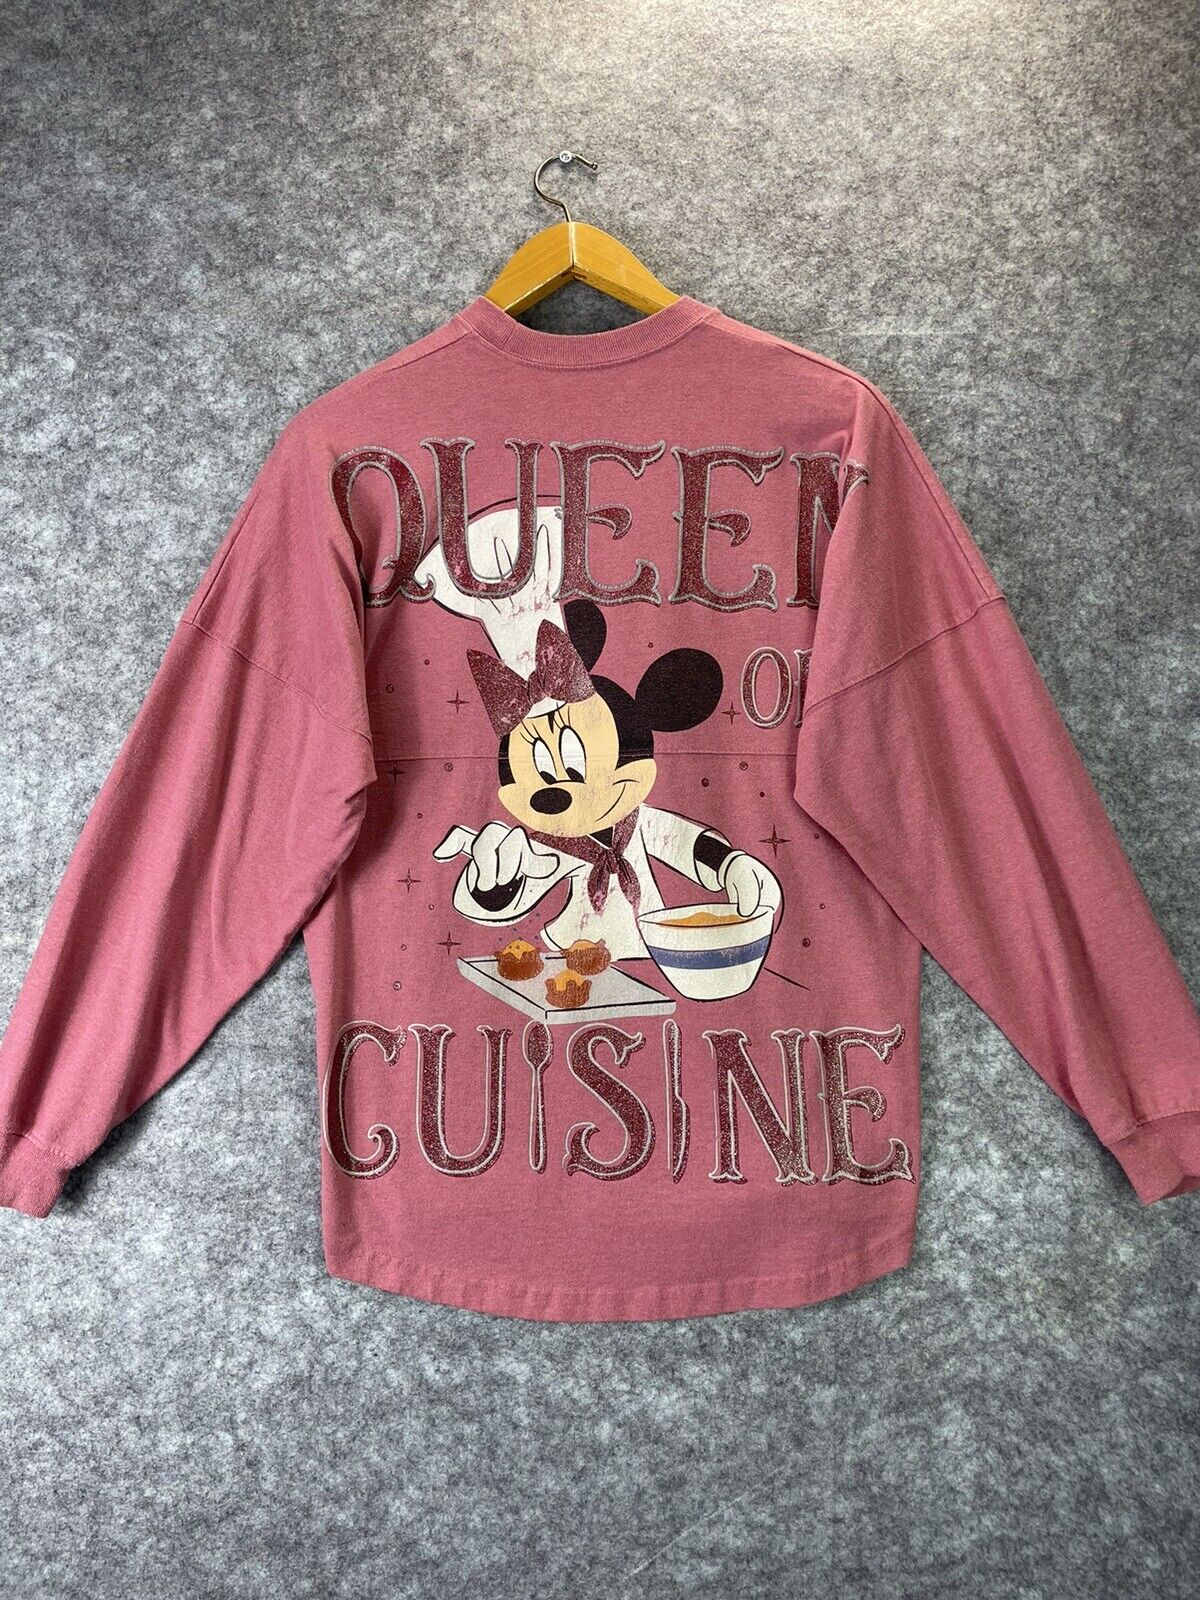 Disney Spirit Jersey Medium Minnie Mouse Queen Of Cuisine Food & Wine Fest 2020